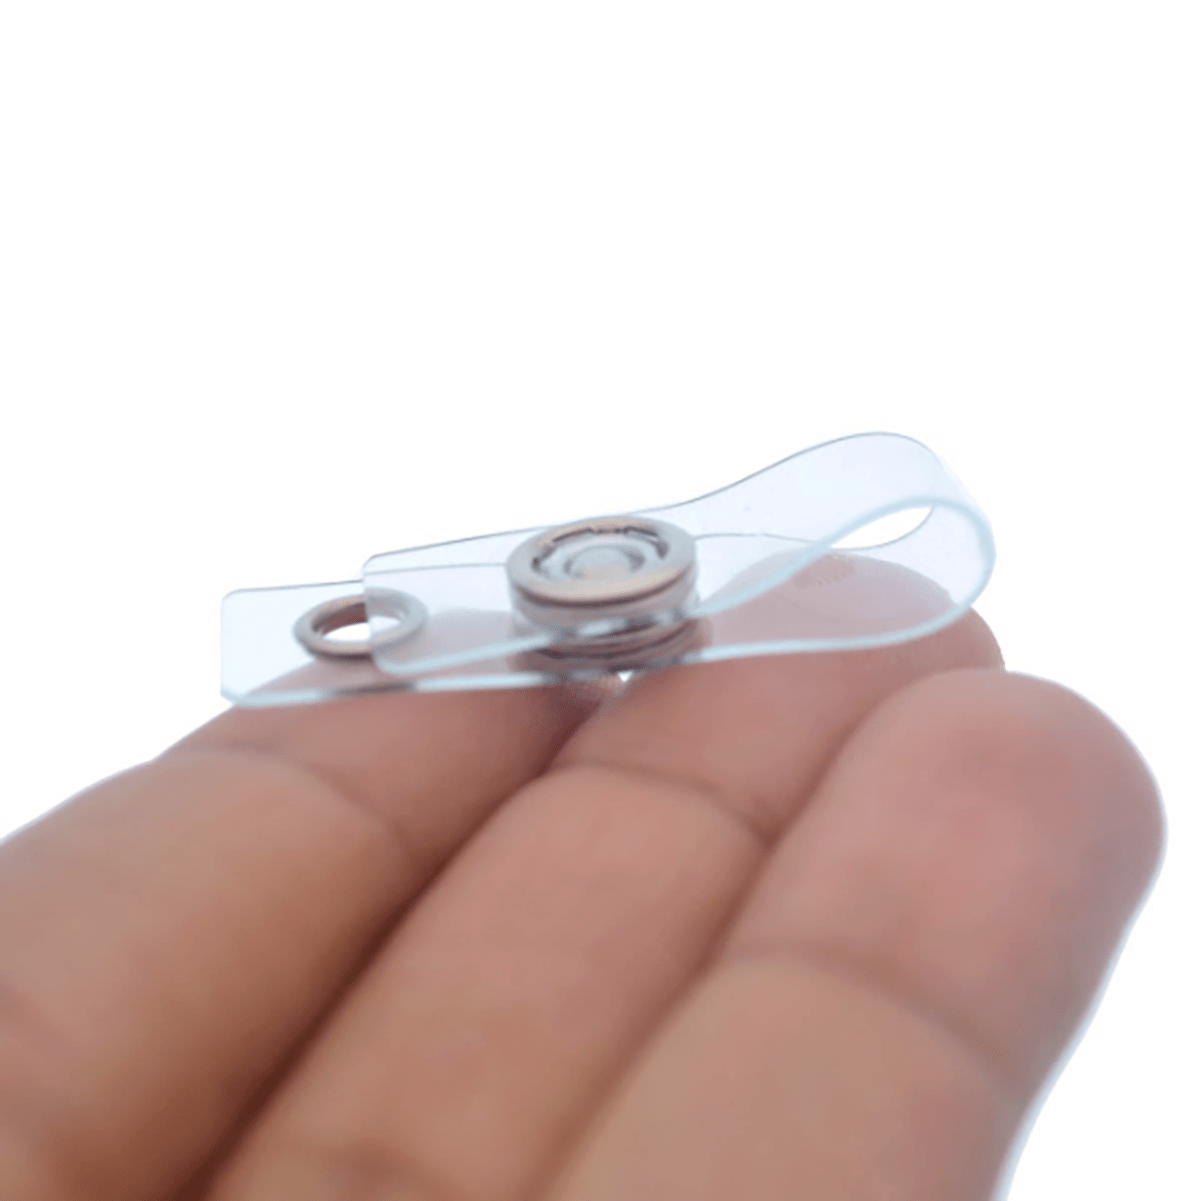 Horizontal Clear Service & Award Pin Strap Clip Adapter w/ Slot